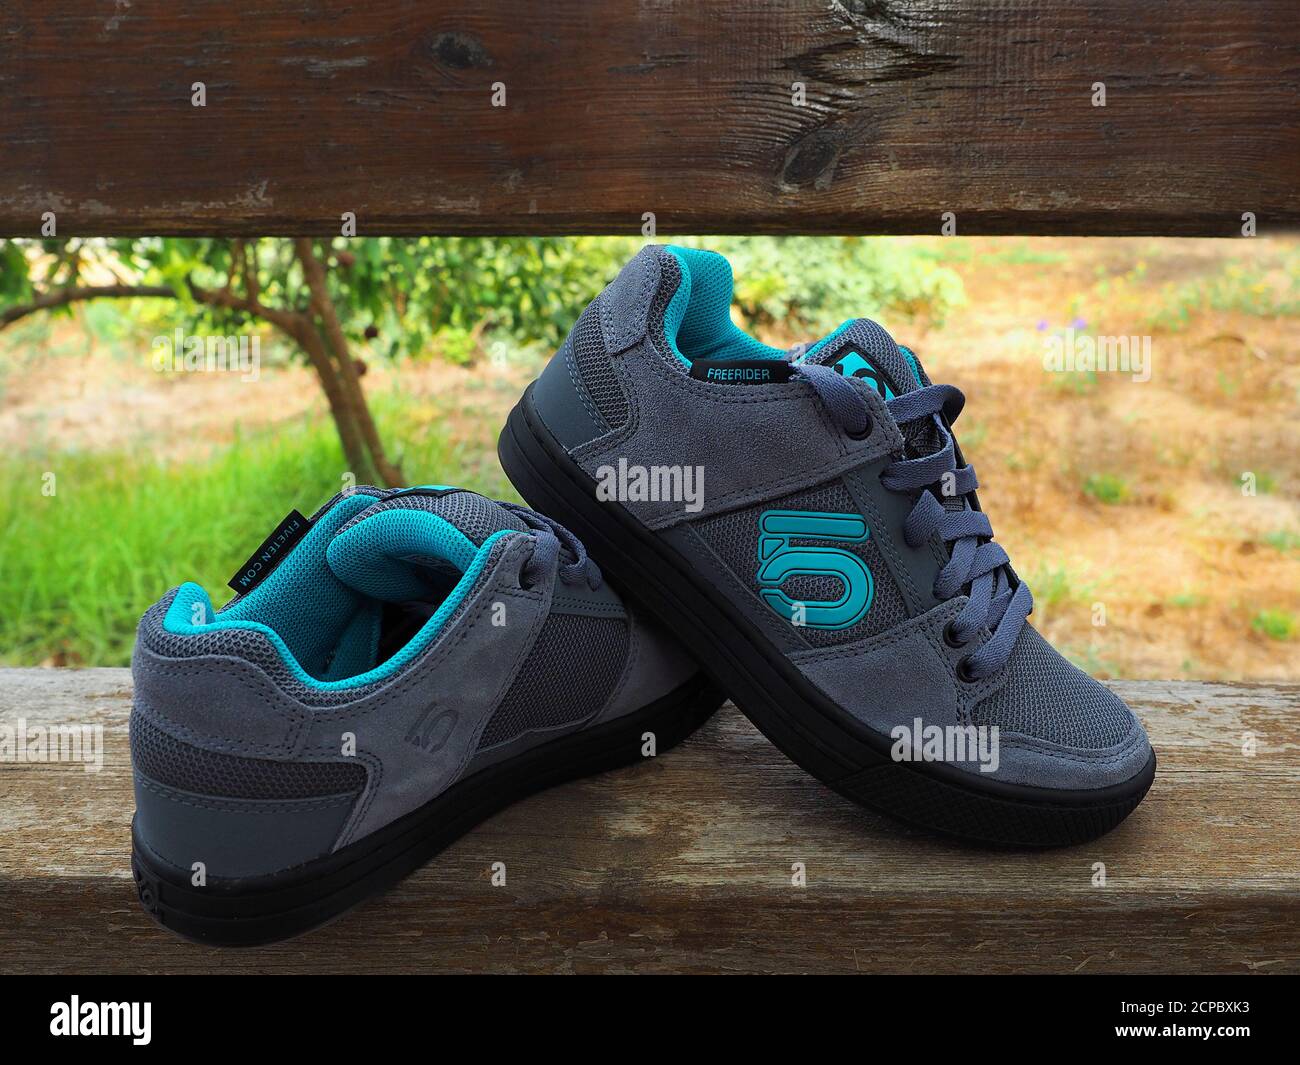 Adidas Five Ten Freerider - Frau Mountainbike Schuhe Stockfotografie - Alamy